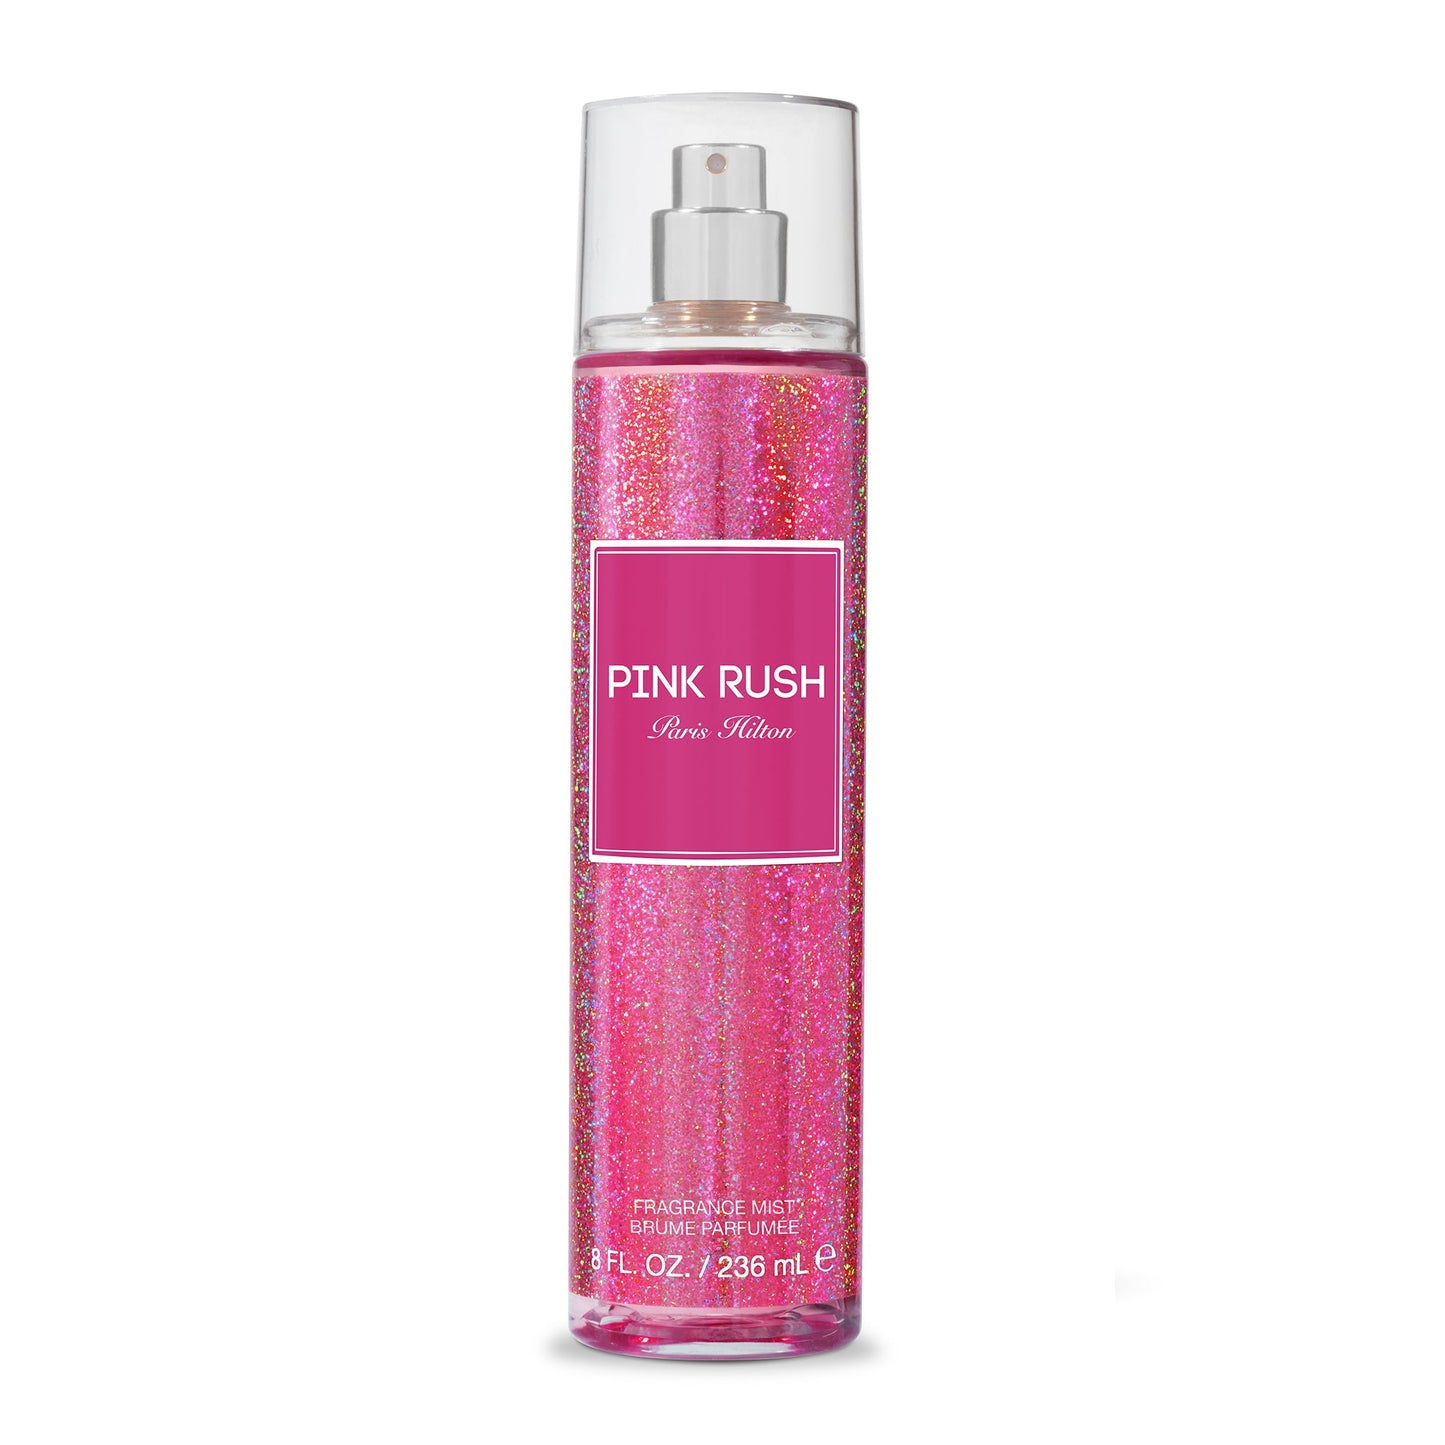 Pink Rush Body Spray 8oz by Paris Hilton Fragrances